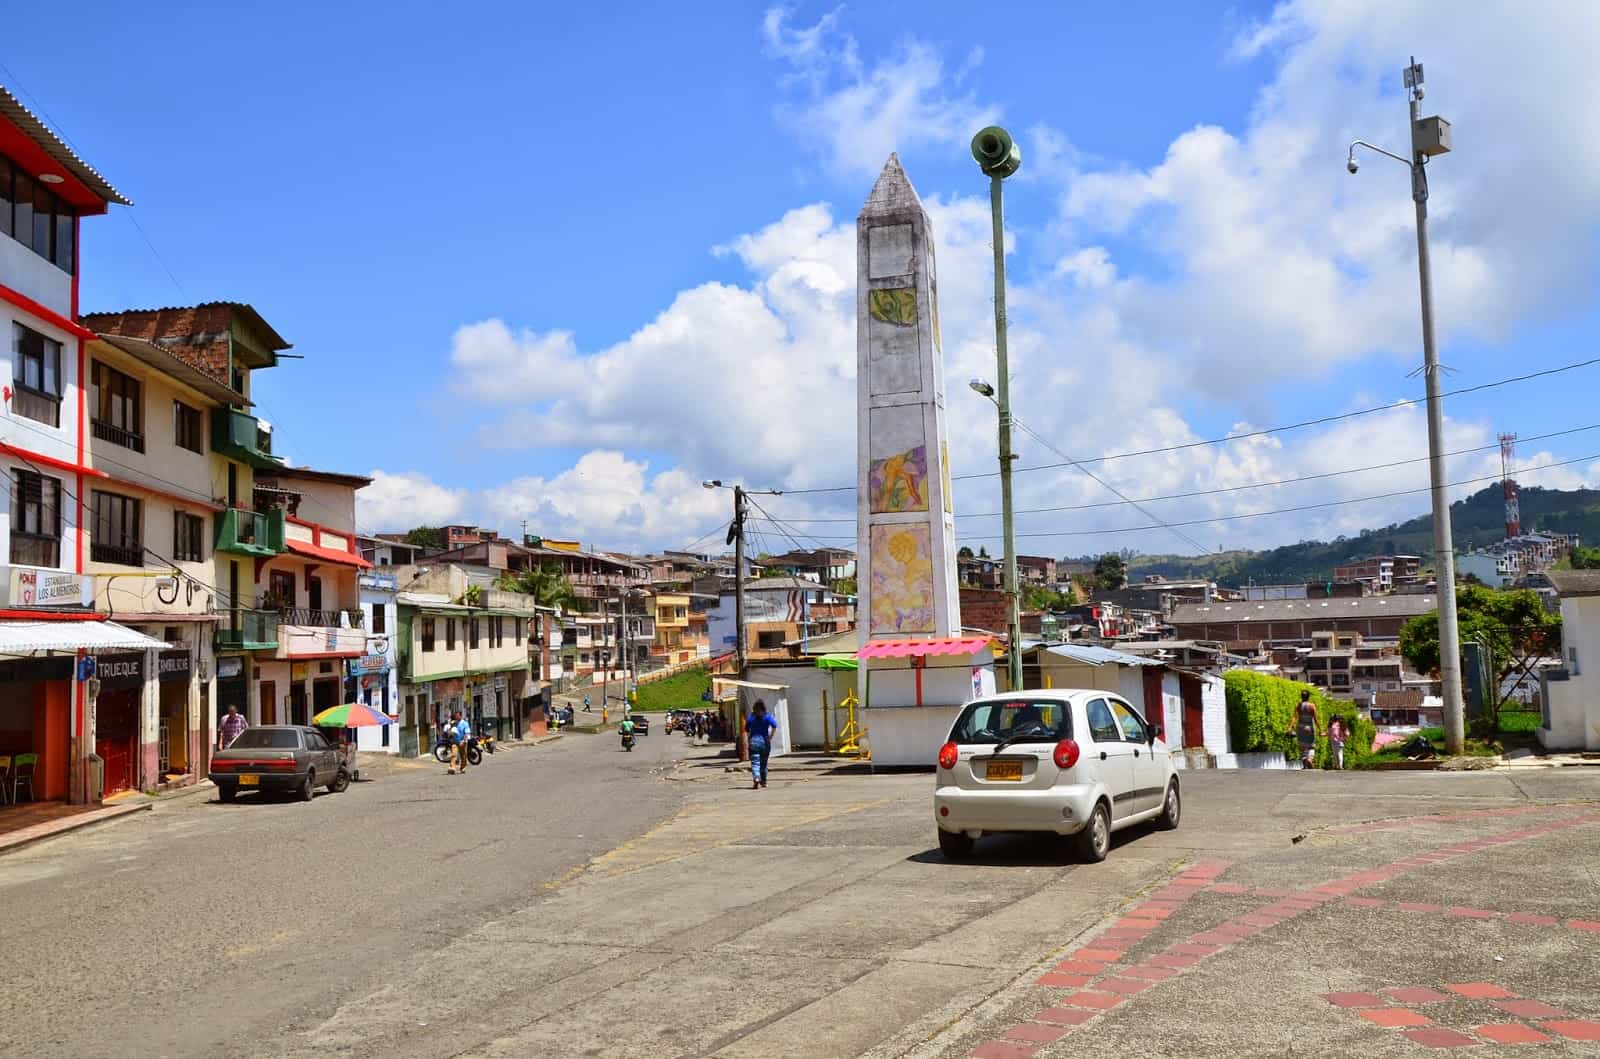 Obelisk in Anserma, Caldas, Colombia